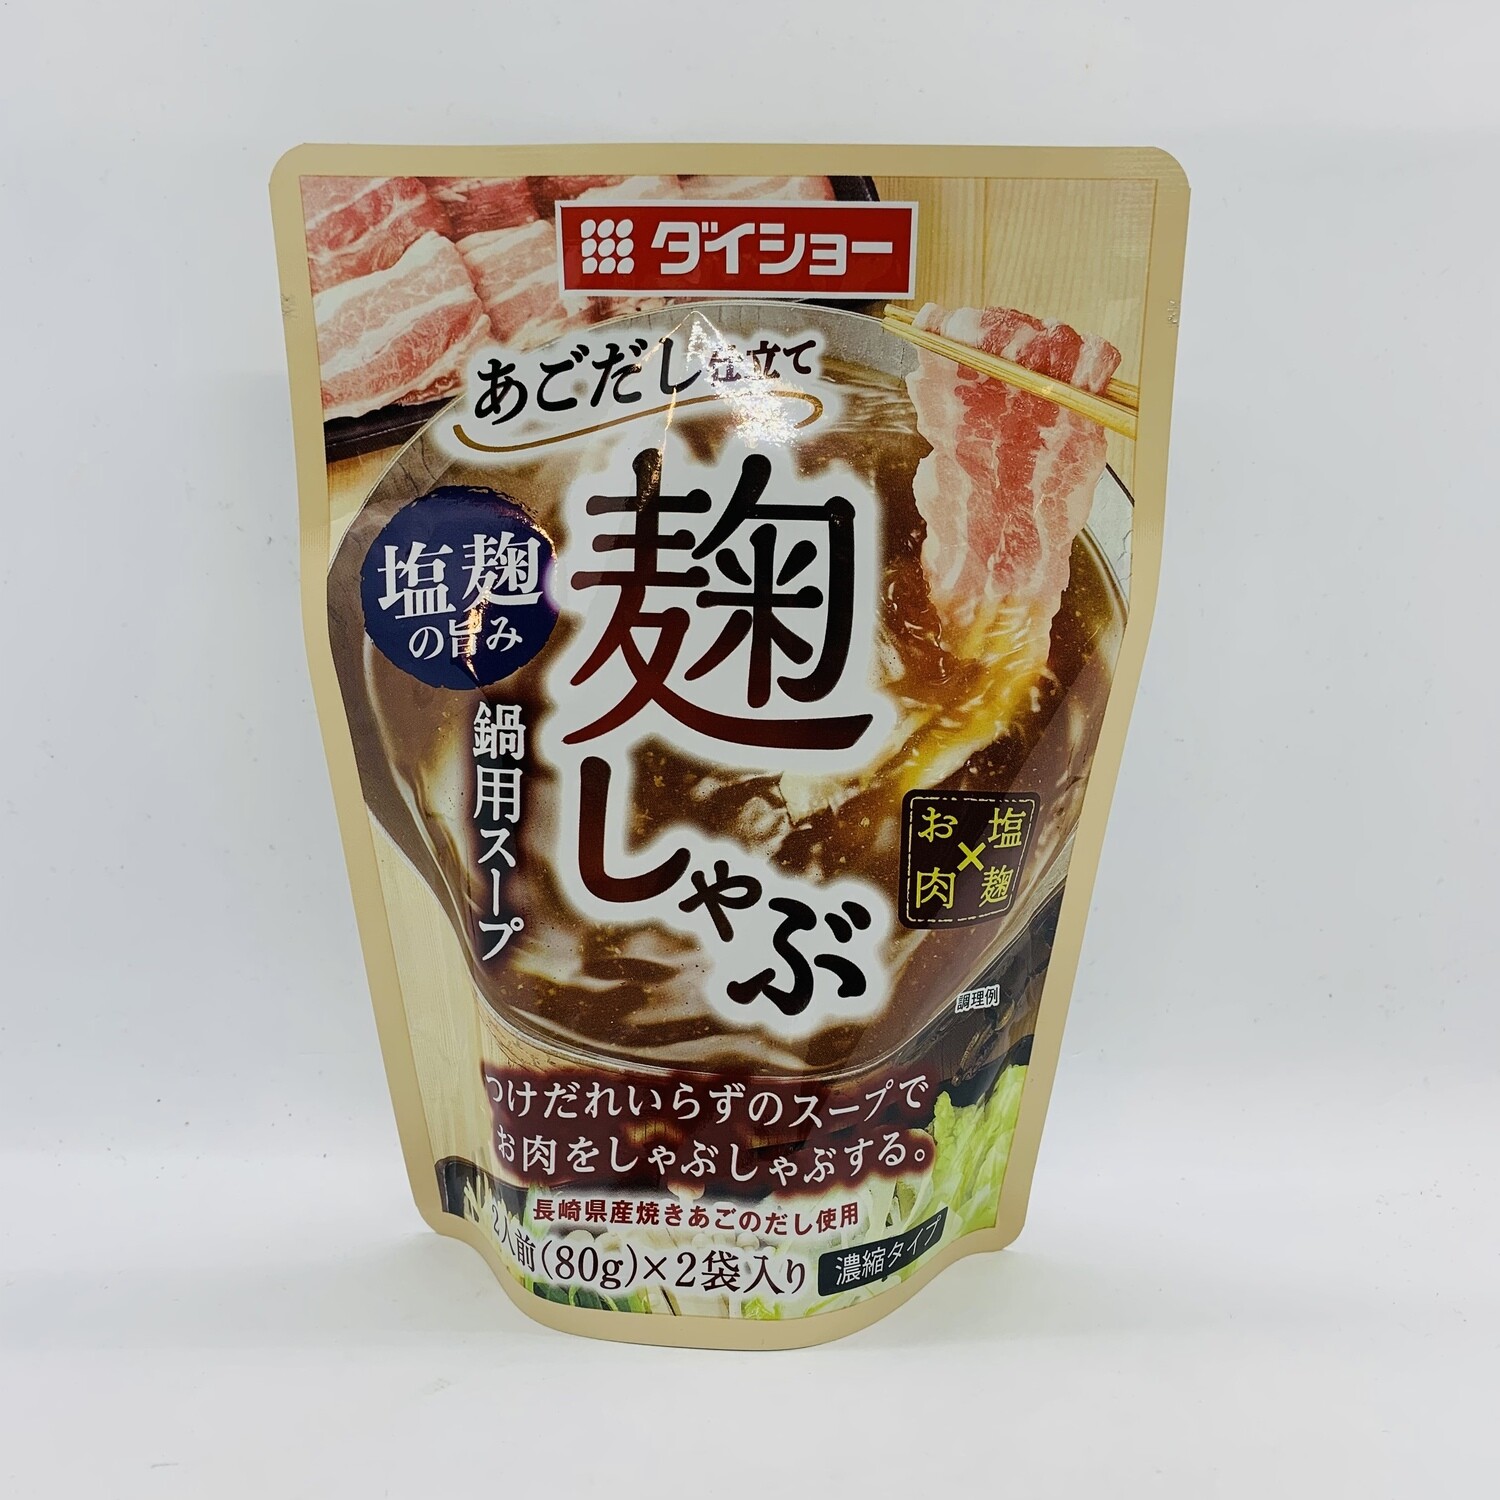 Daisho Koji Shabu Sauce